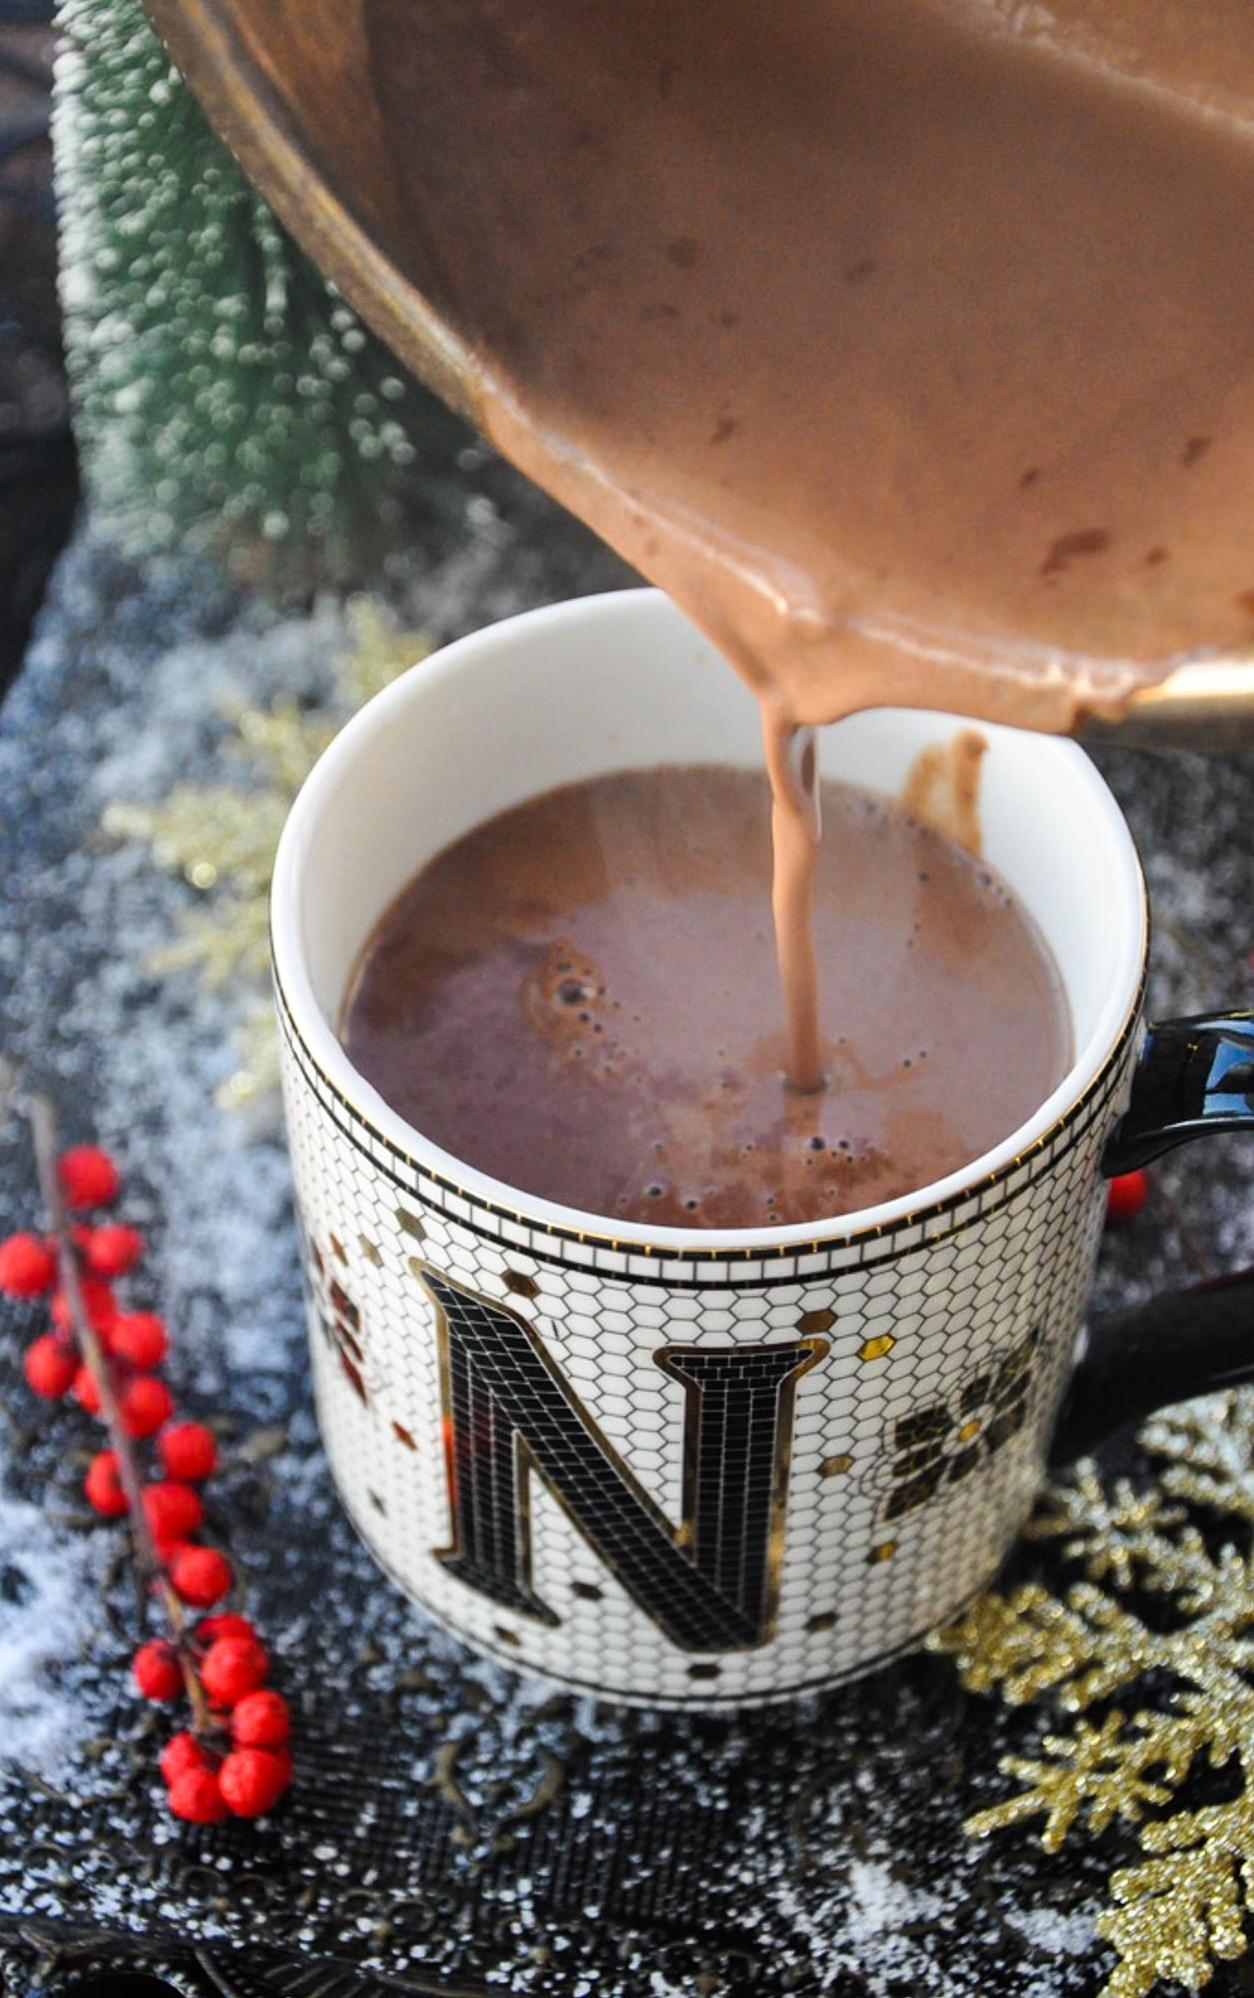 Mocha-Soy Hot Chocolate